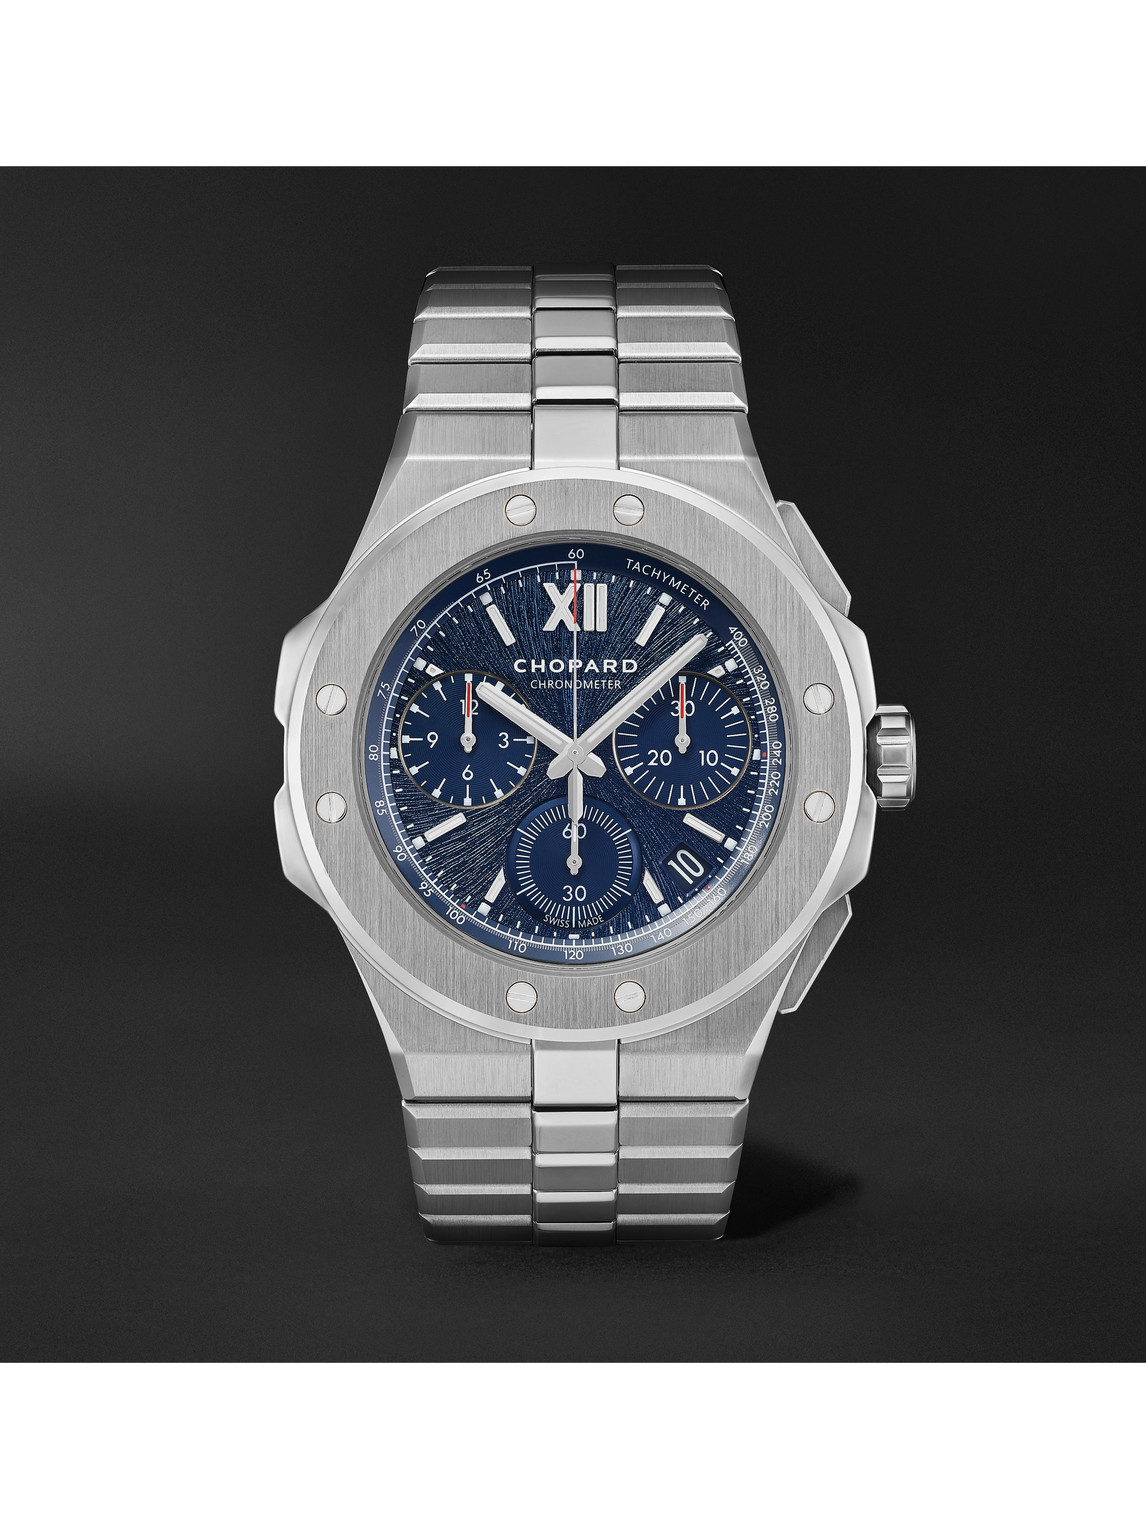 Chopard Alpine Eagle XL Chrono Automatic 44mm Lucent Steel Watch, Ref. No. 298609-3001